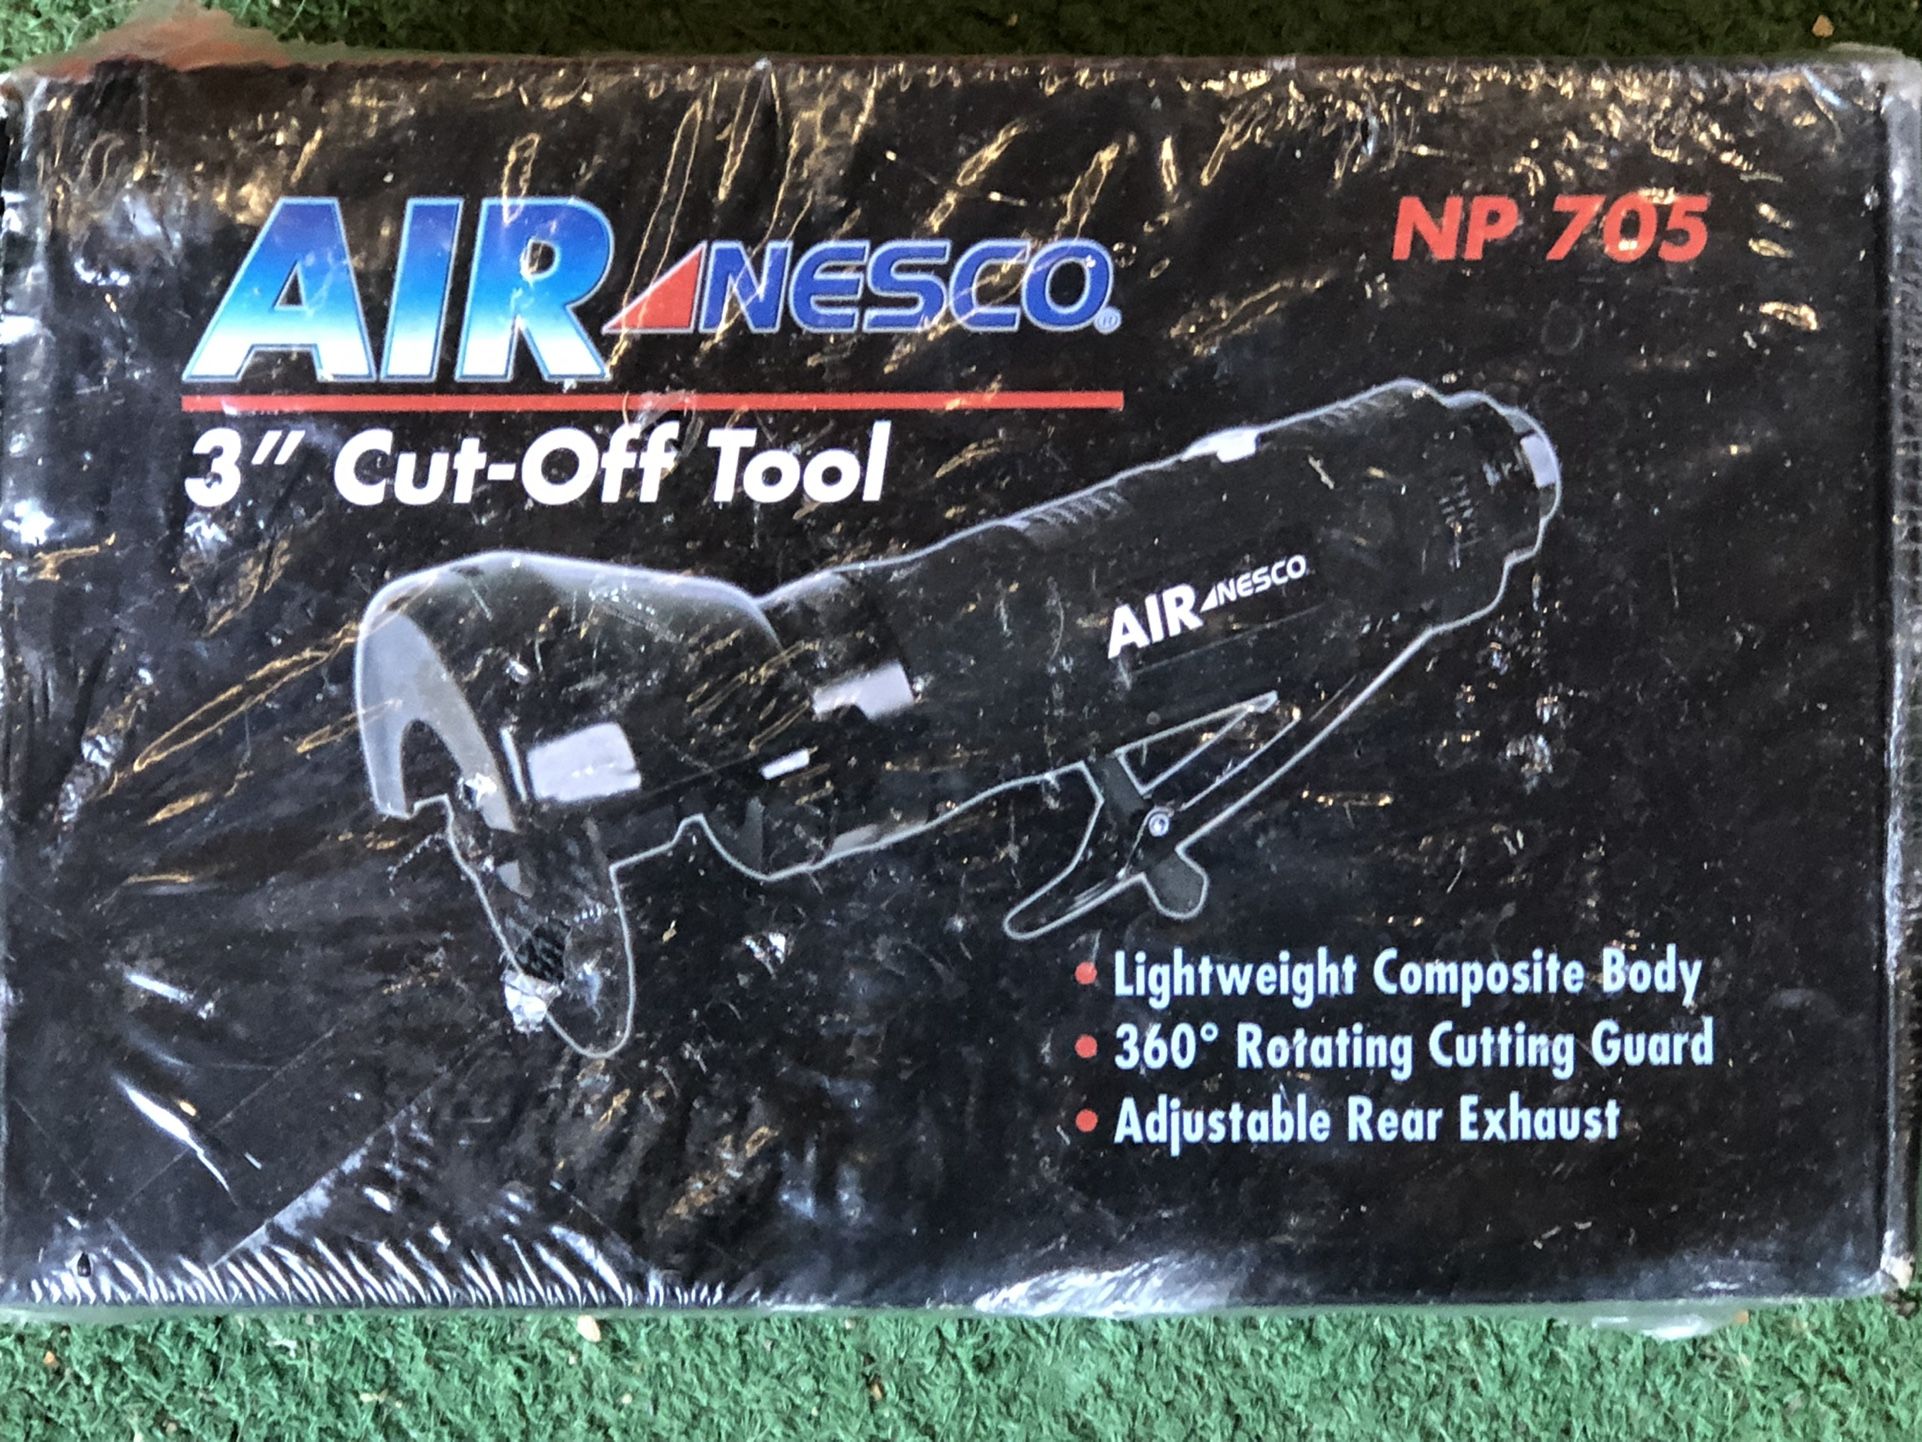 Brand New Never Used NESCO Air Powered Pneumatic 3” Cutoff Tool. $30.00 Firm